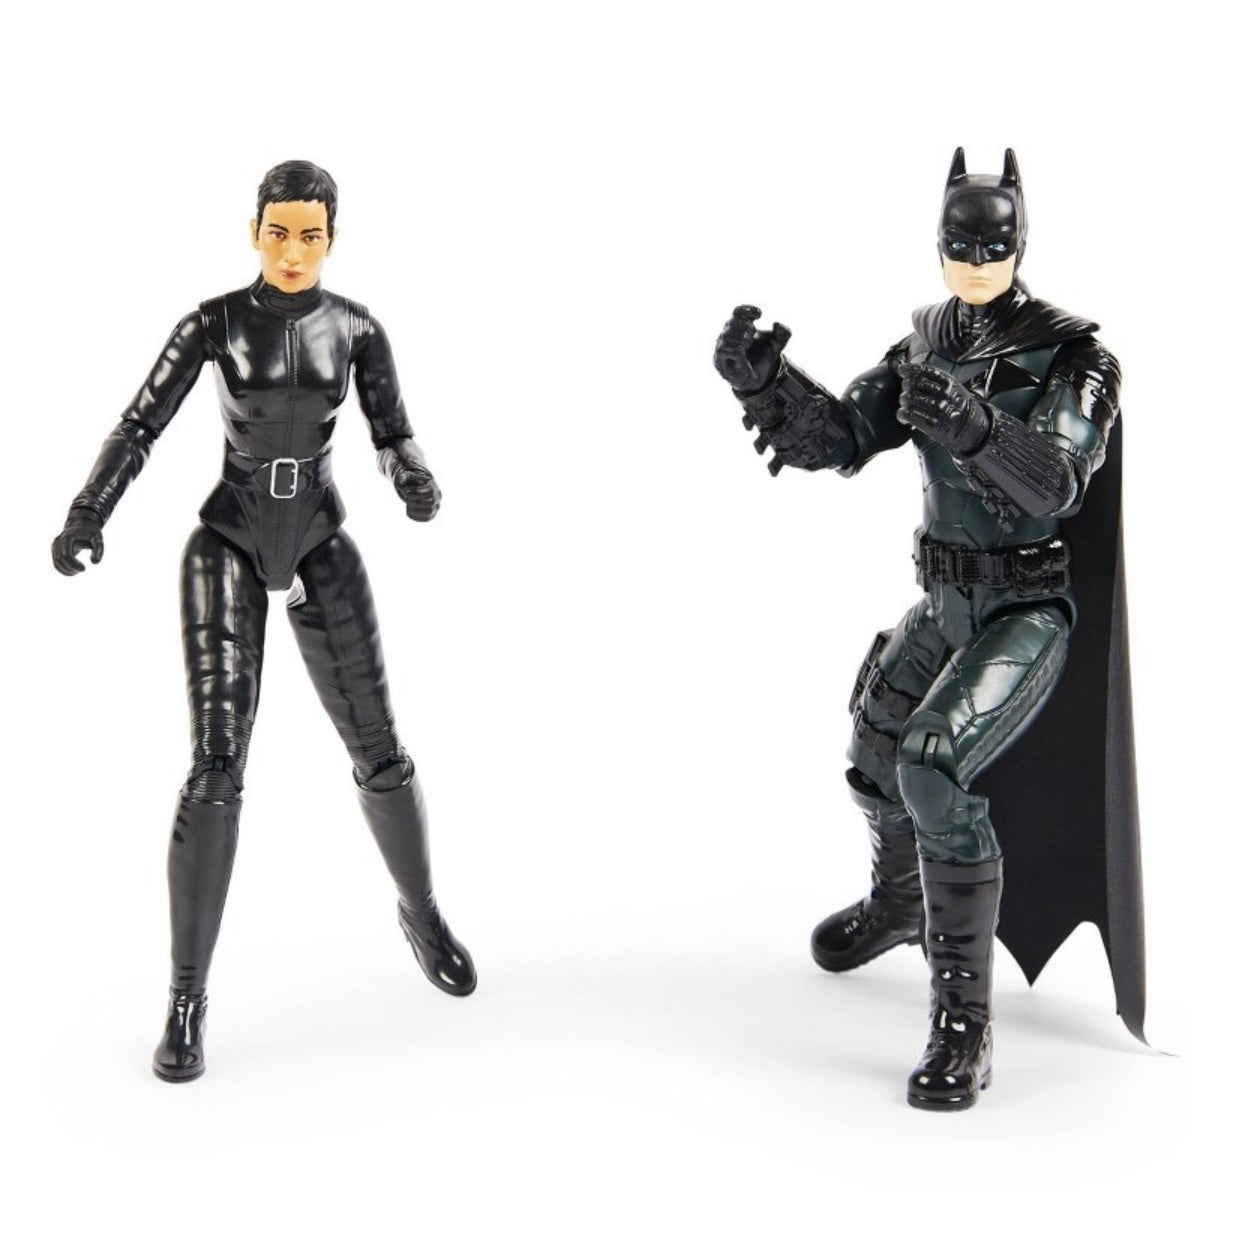 DC Comics Batman Batcycle Pack with 4 Figures (Target Exclusive)